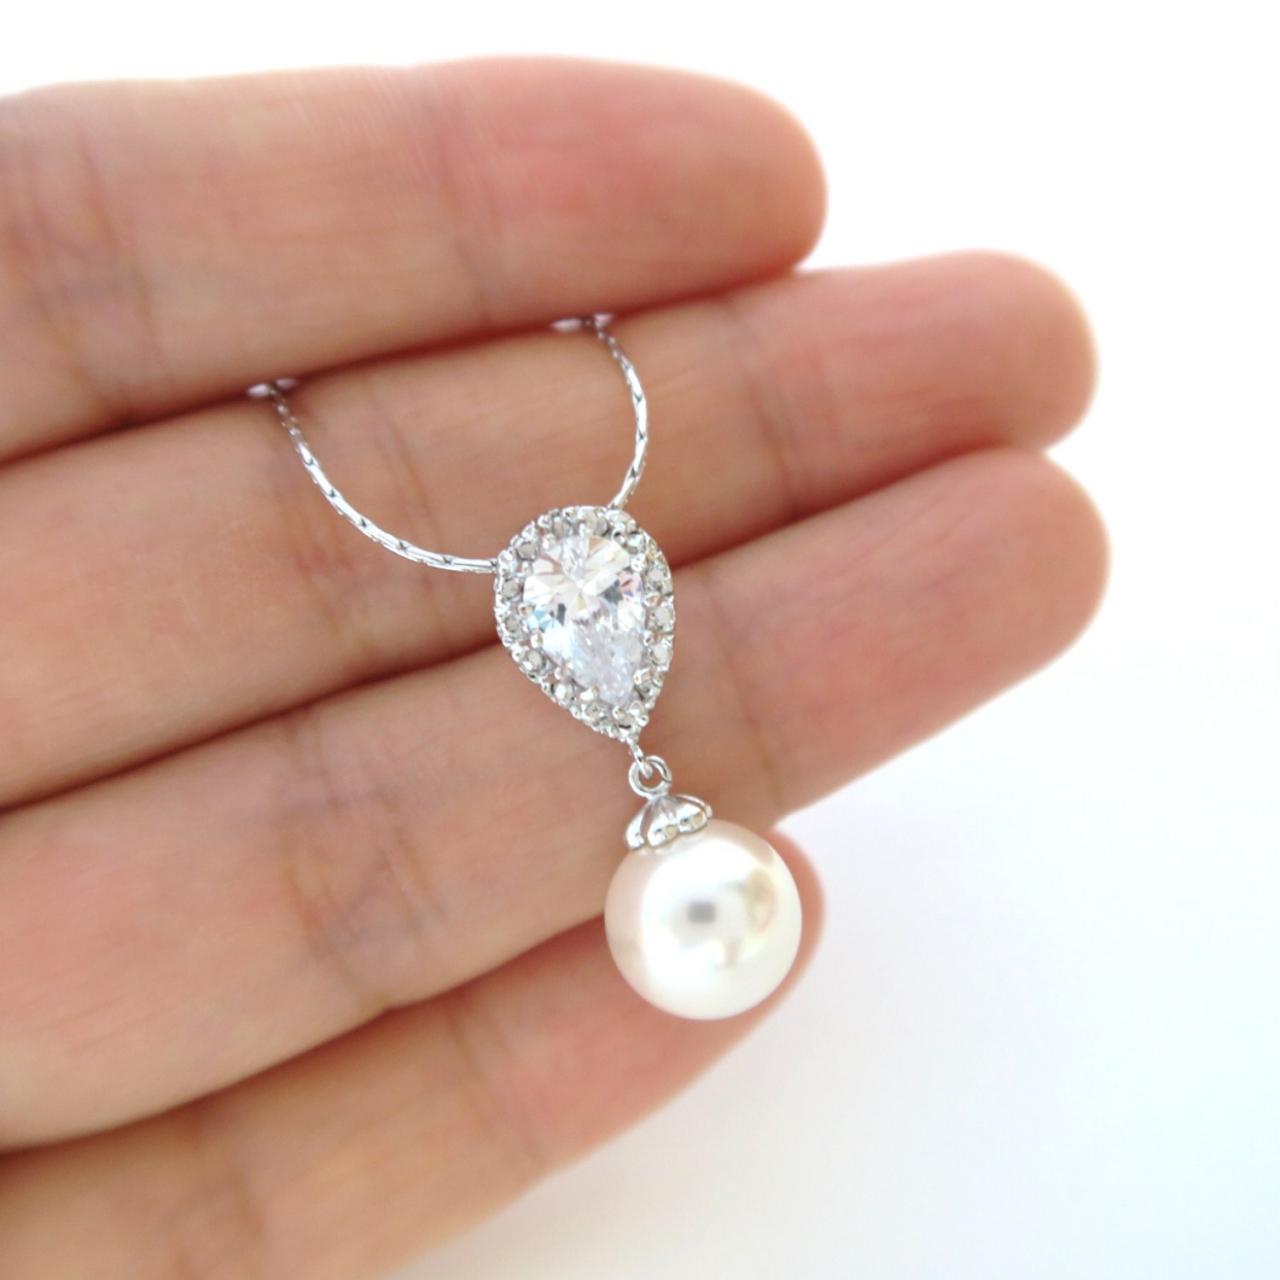 Bridal Pearl Necklace Wedding Necklace Swarovski 10mm Round Pearl Wedding Drop Pendant Bridesmaid Gift Cubic Zirconia Pendant (n051)